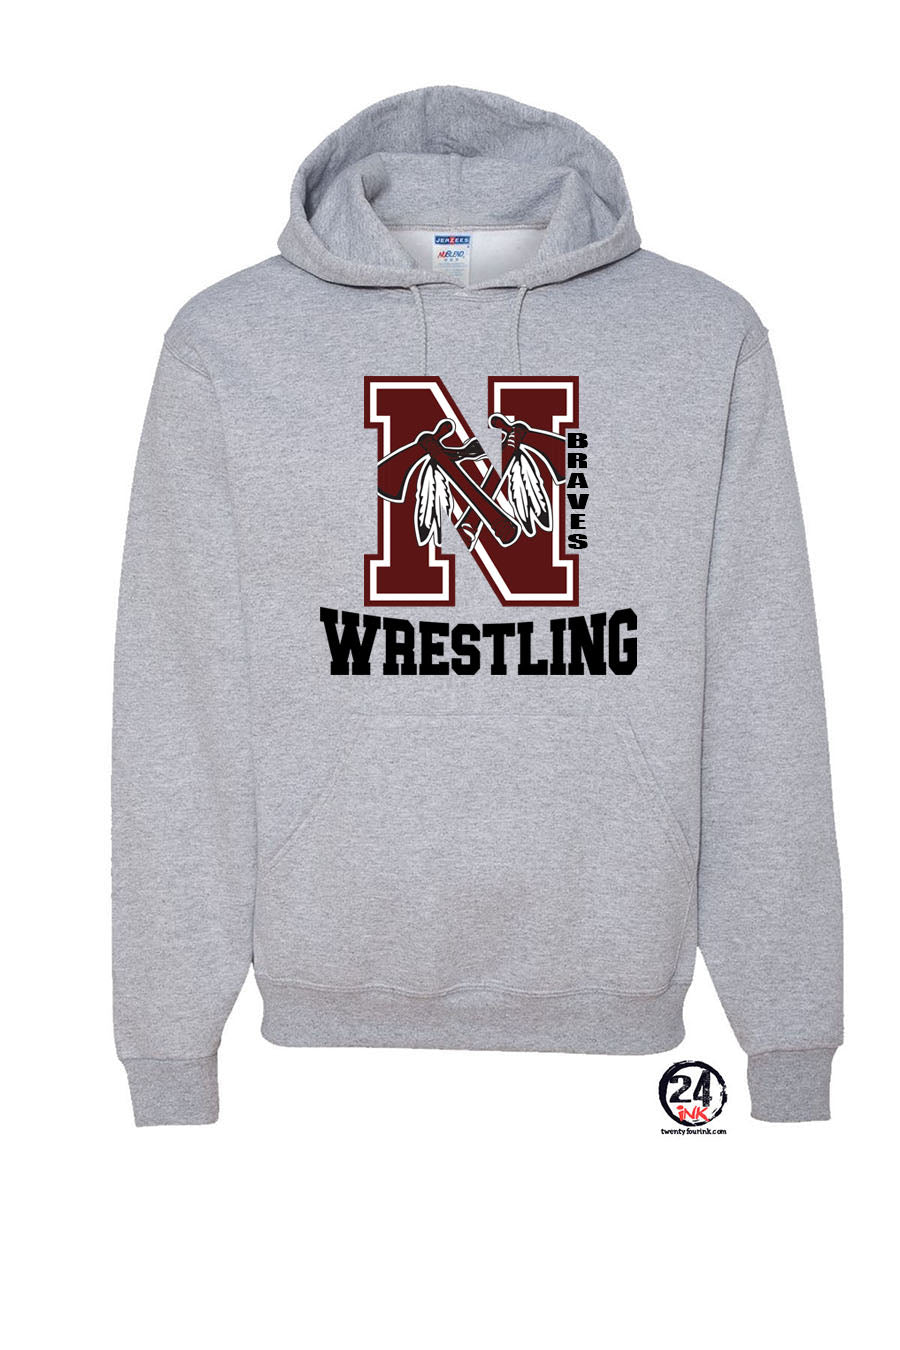 Newton Wrestling Design 4 Hooded Sweatshirt